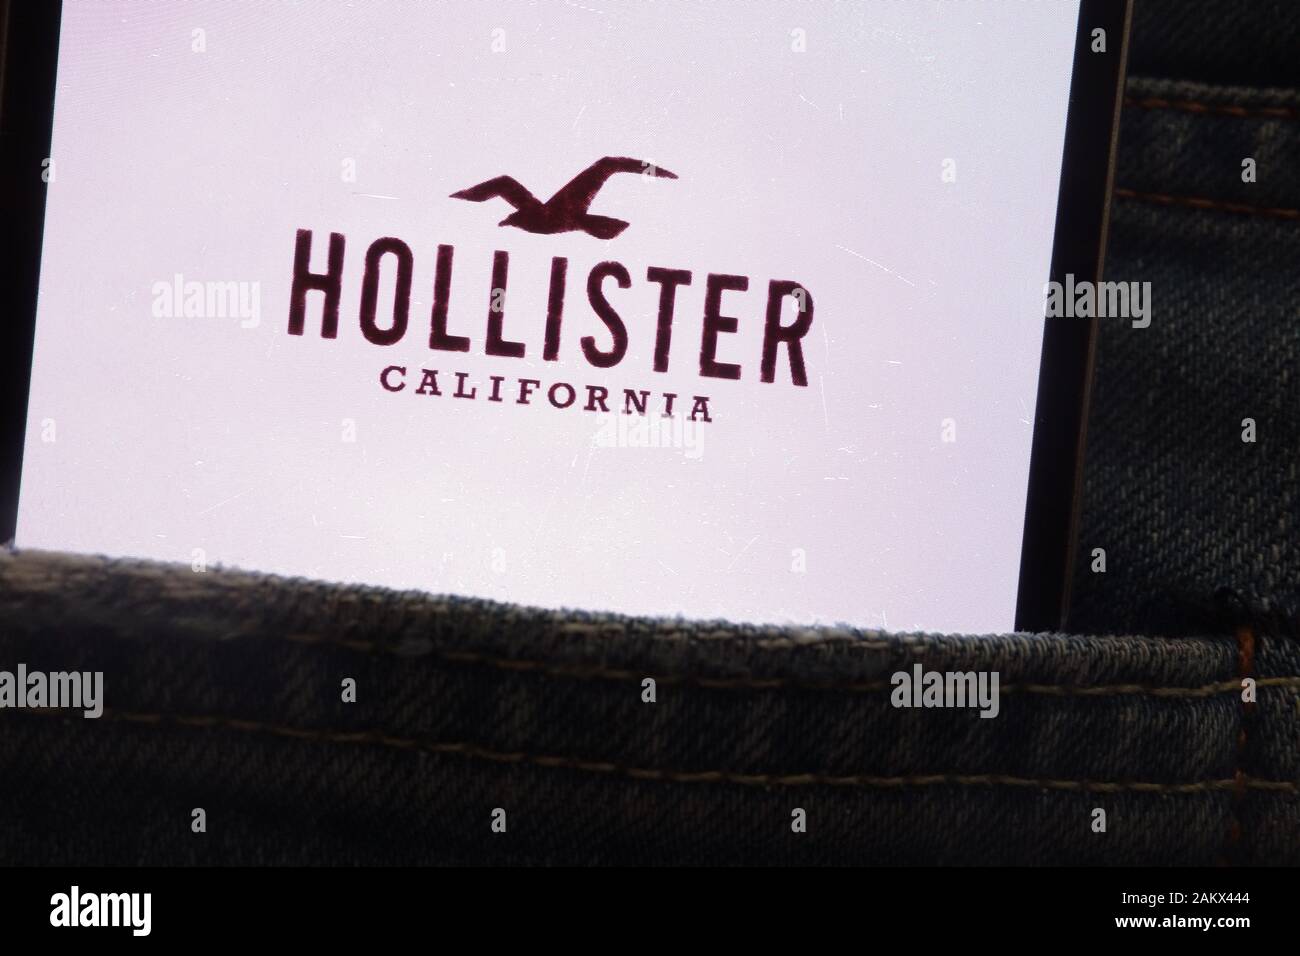 Hollister logo displayed on smartphone hidden in jeans pocket Stock Photo